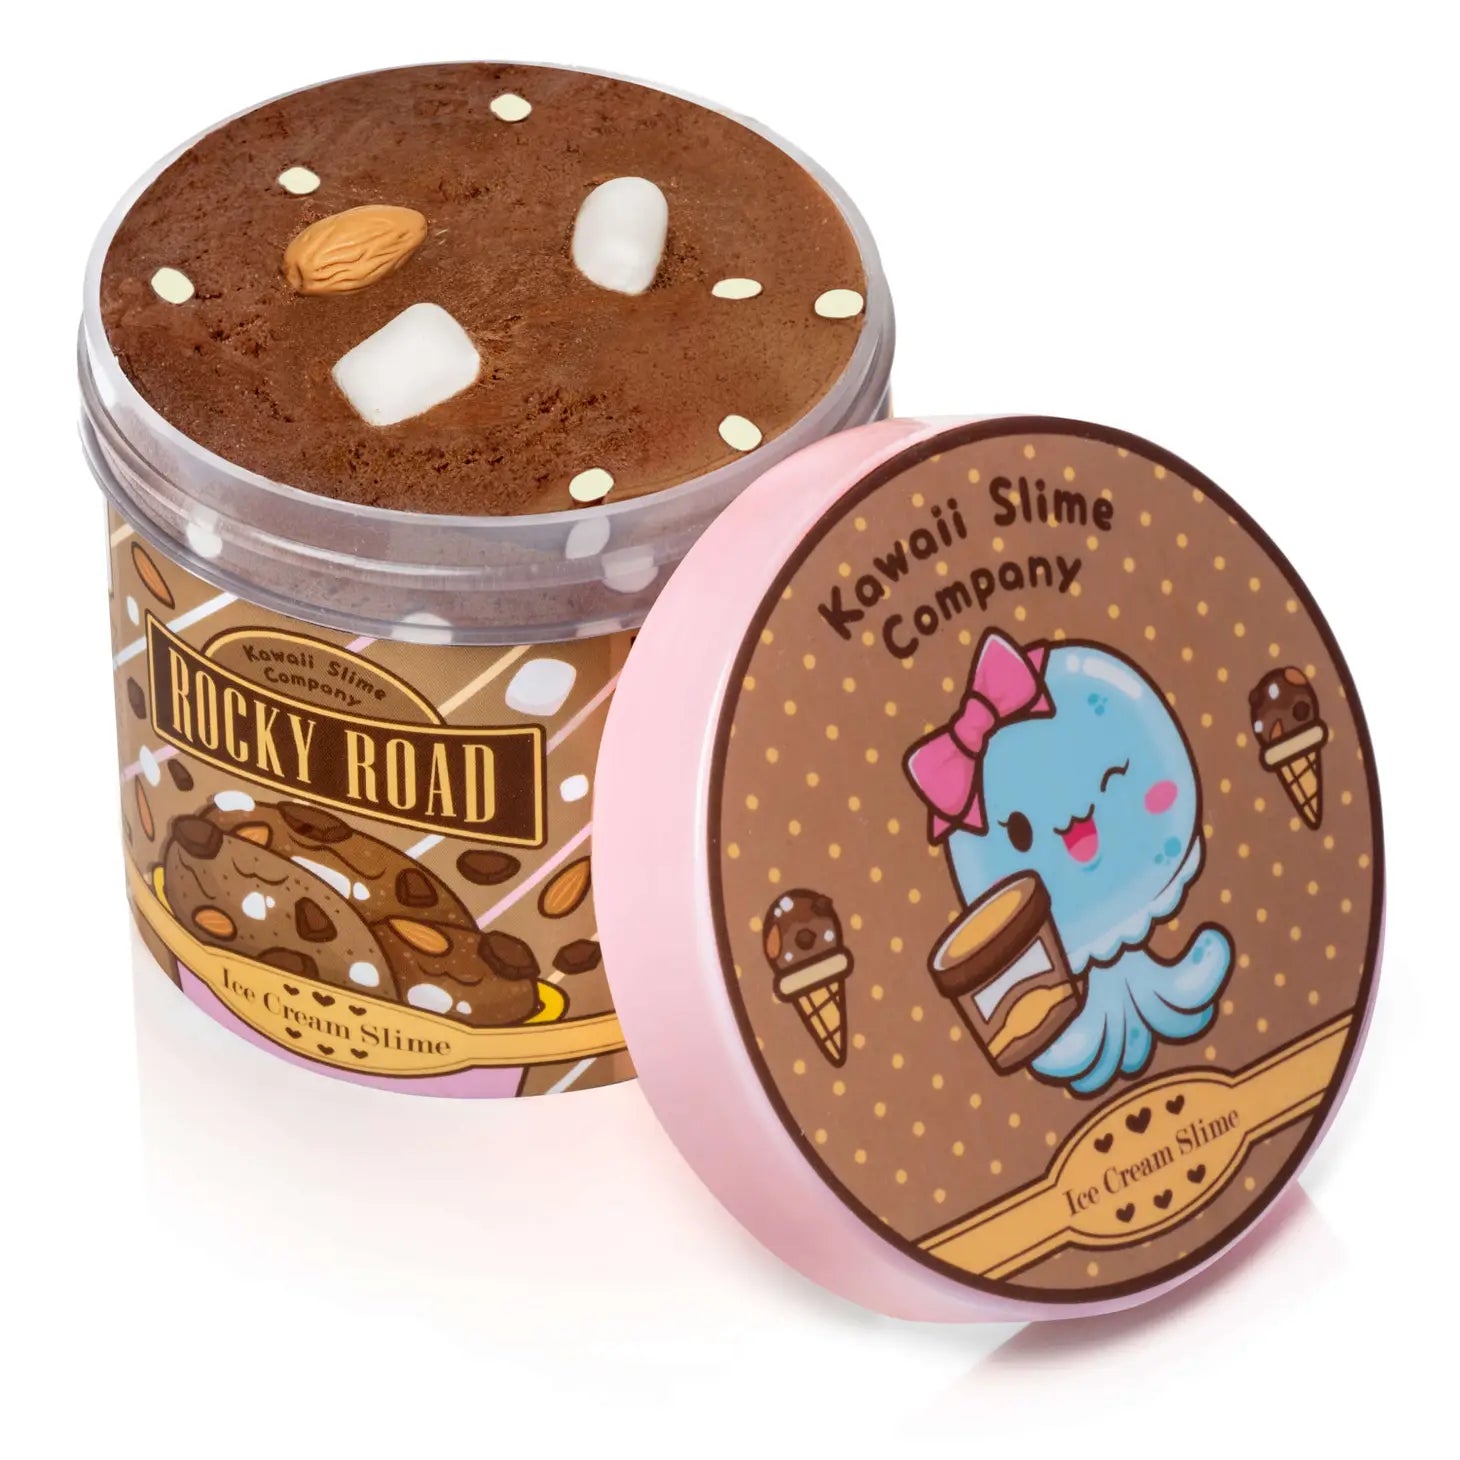 Rocky Road Ice Cream Slime by Kawaii Slime